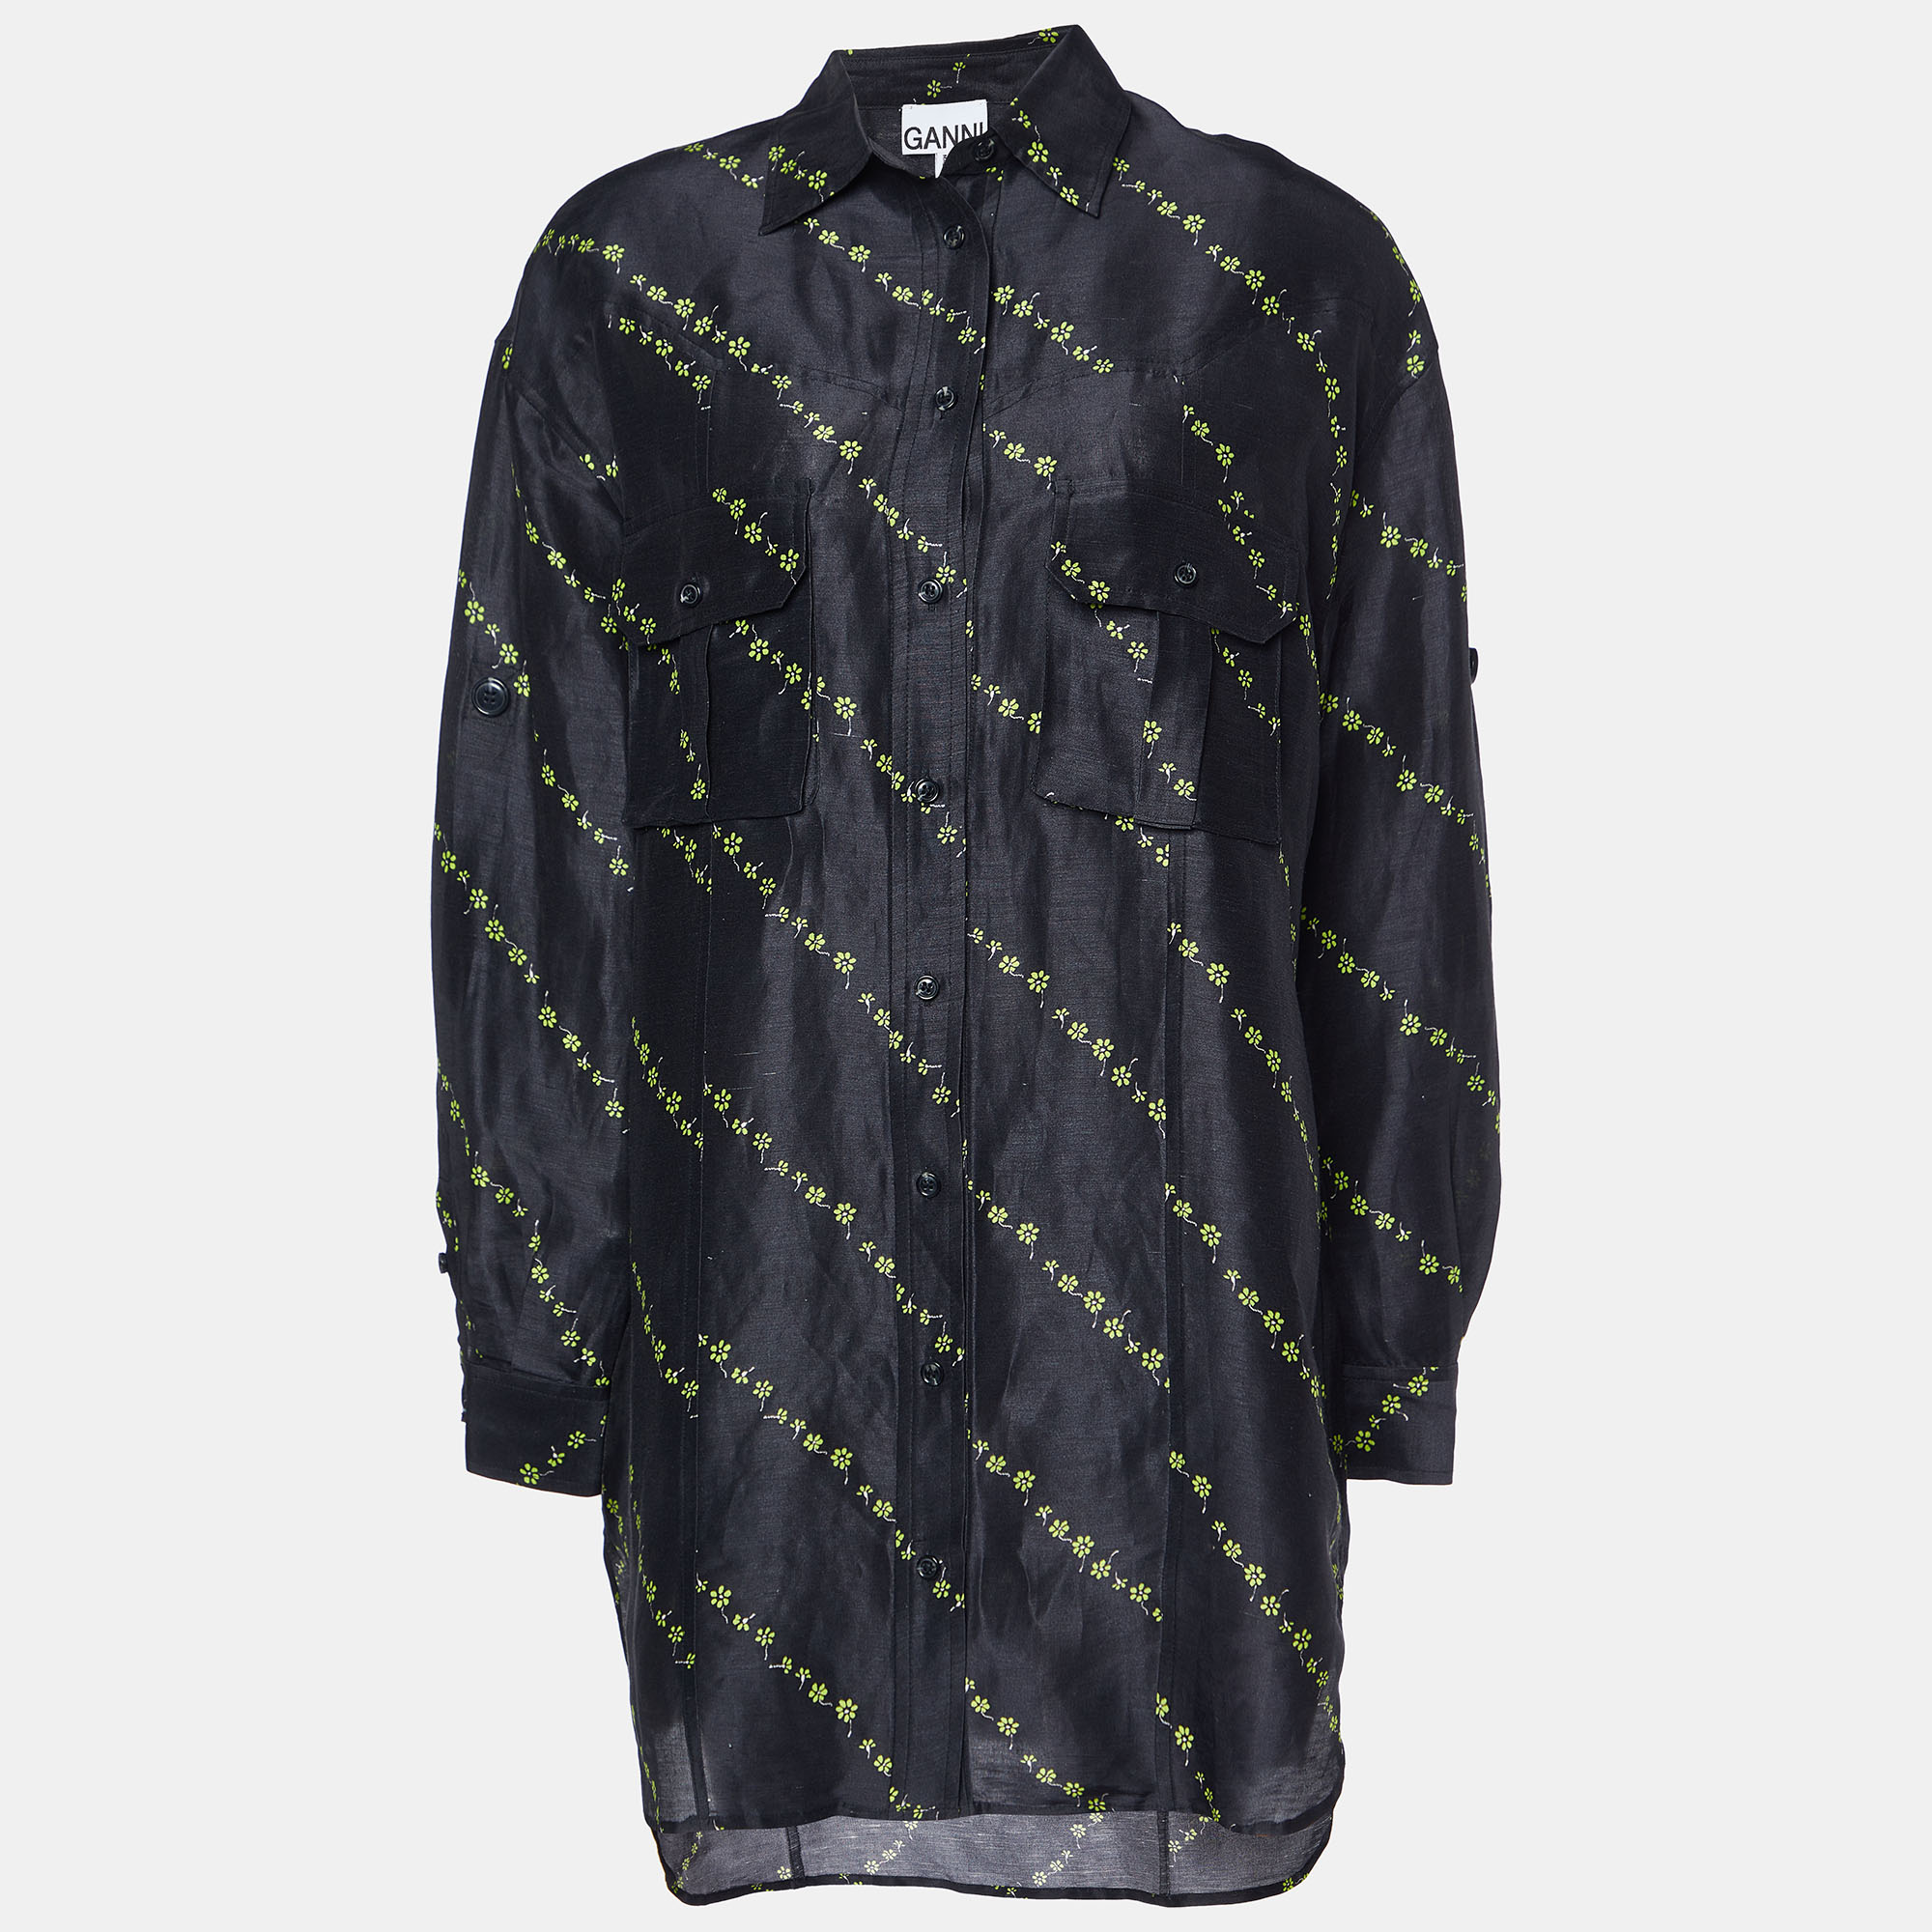 Ganni black floral print linen & silk button front shirt s